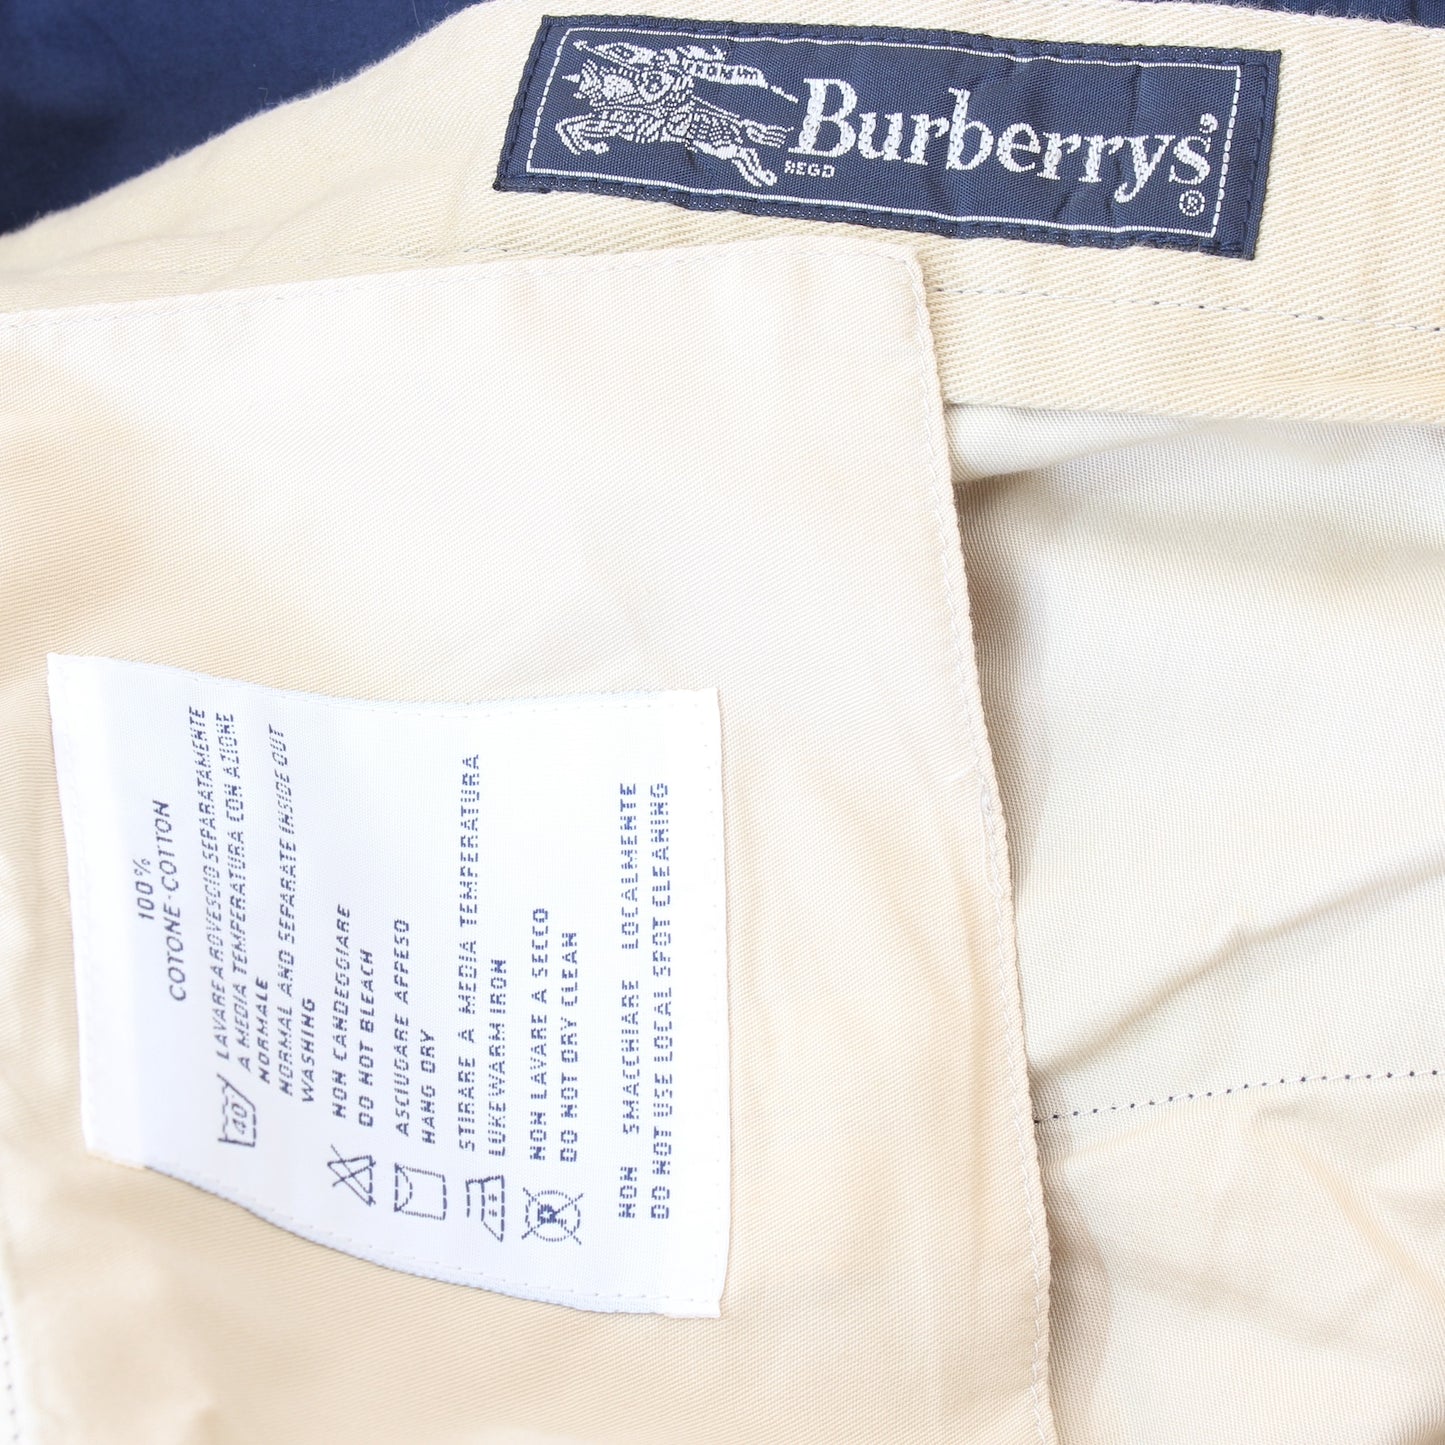 Burberry Pantalone Blu Cotone Vintage Anni 90